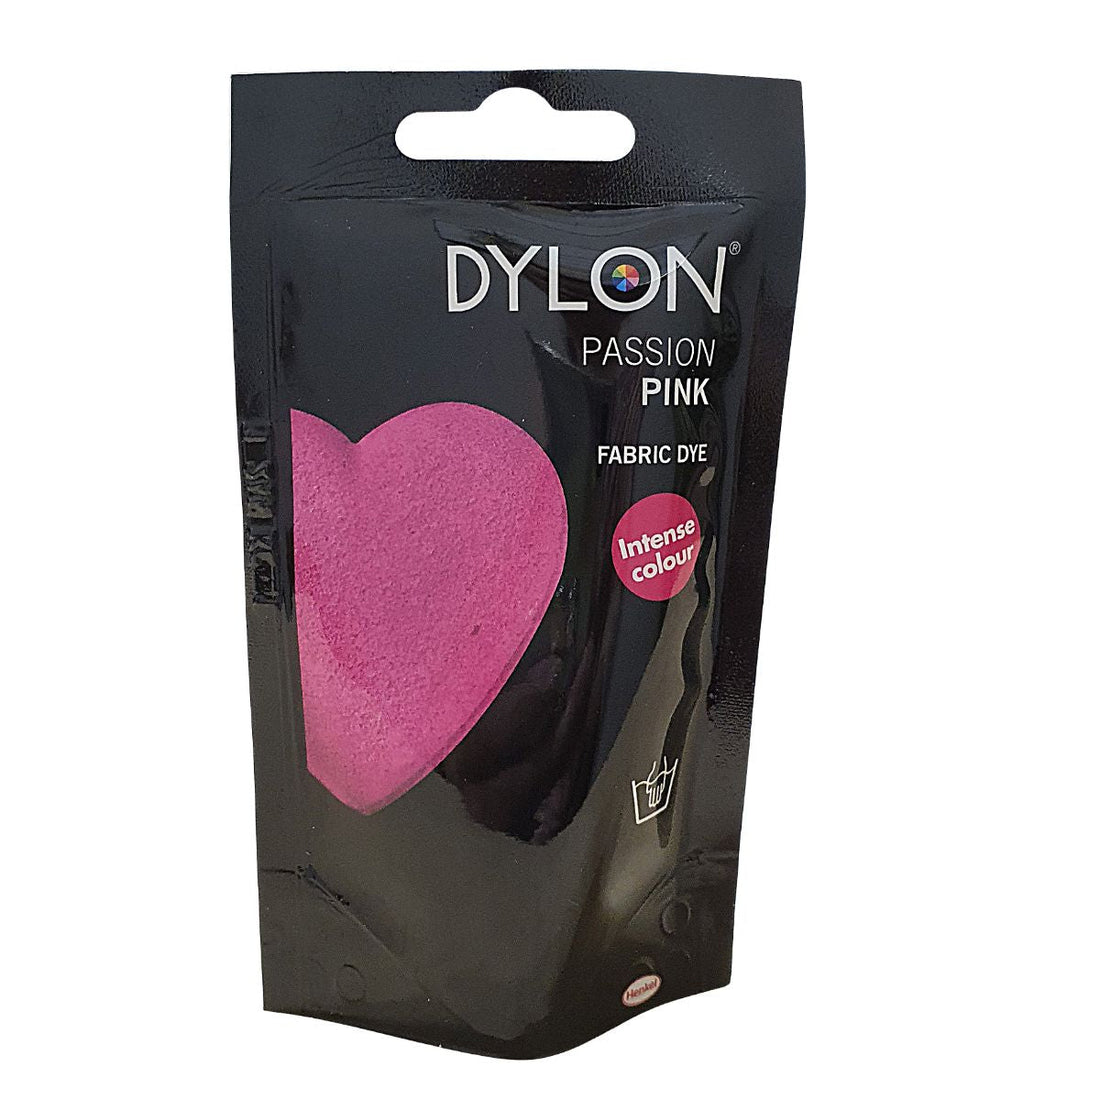 dylon hand fabric dye passion pink